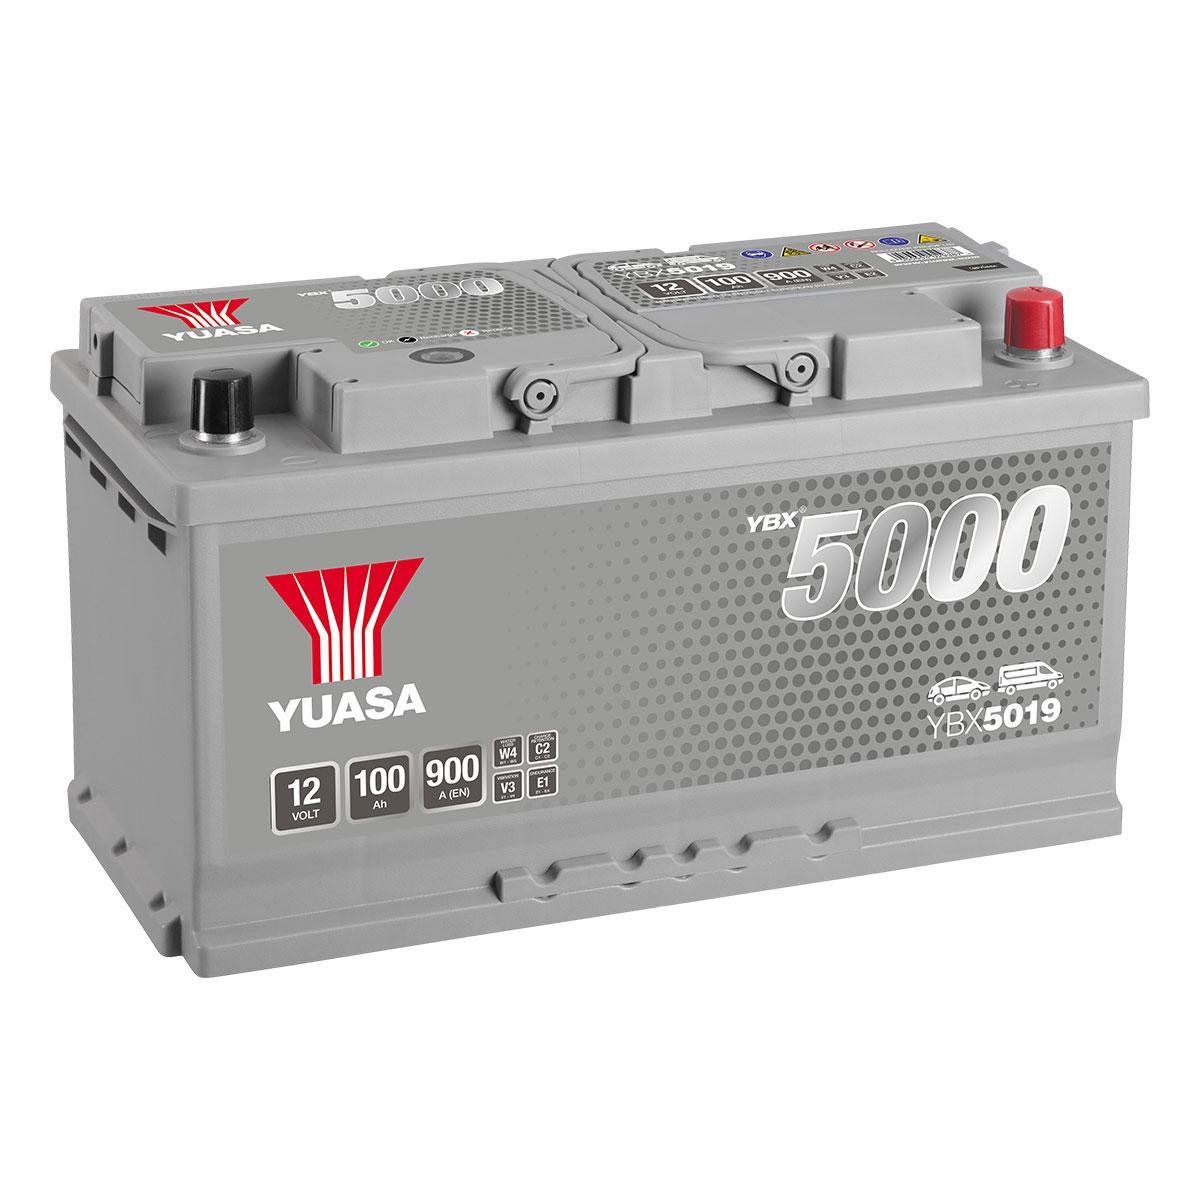 YBX5019 Yuasa 12v 100Ah SMF Car Battery - FREE UK mainland delivery